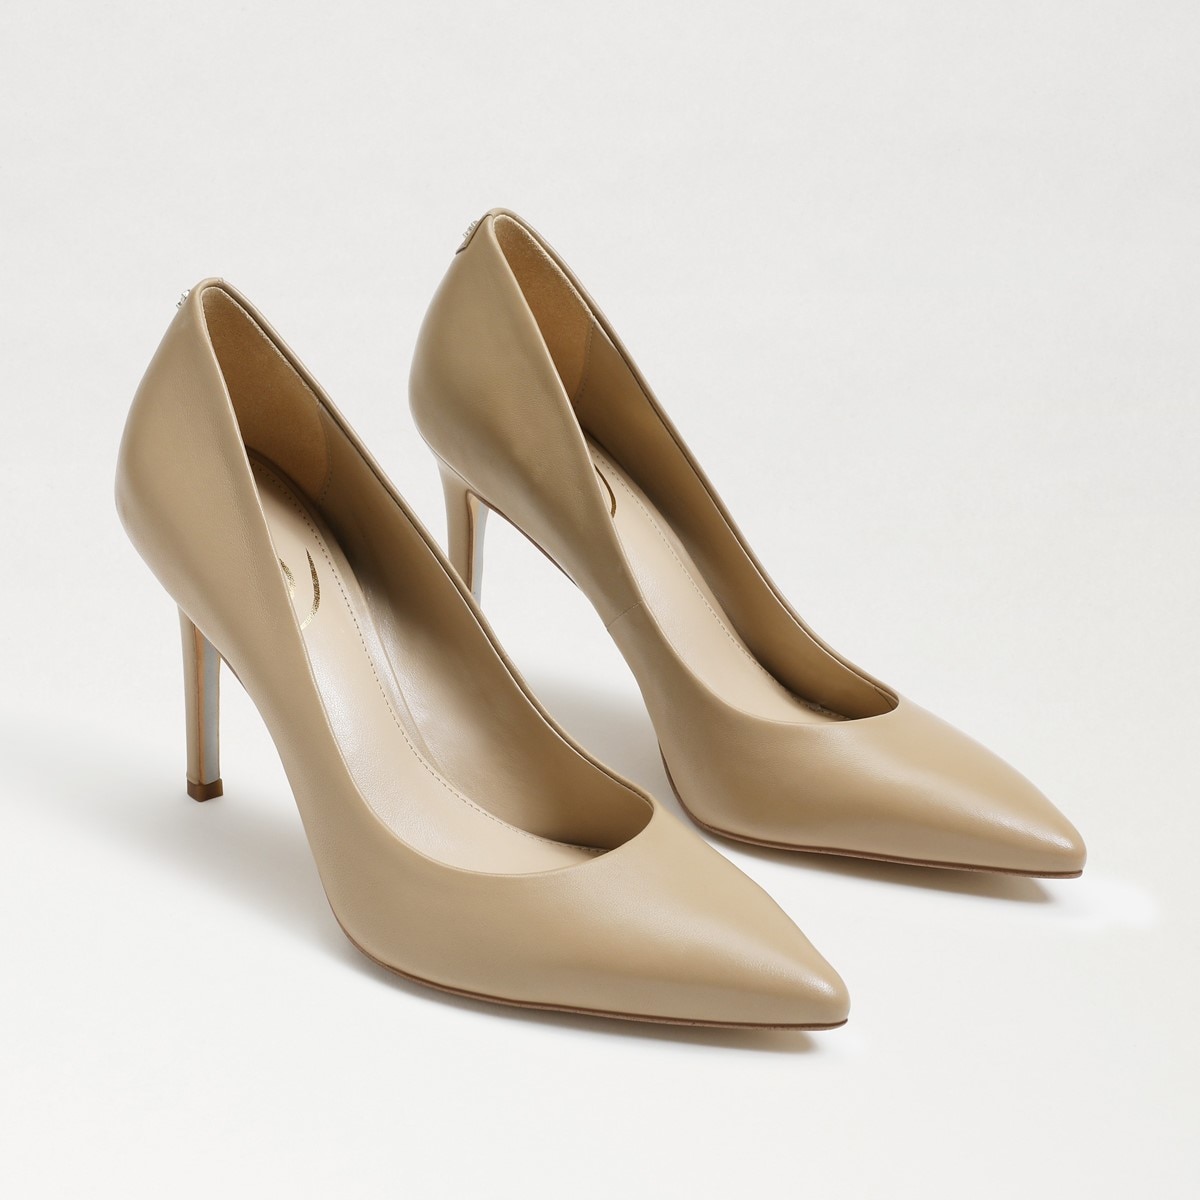 patterned heels